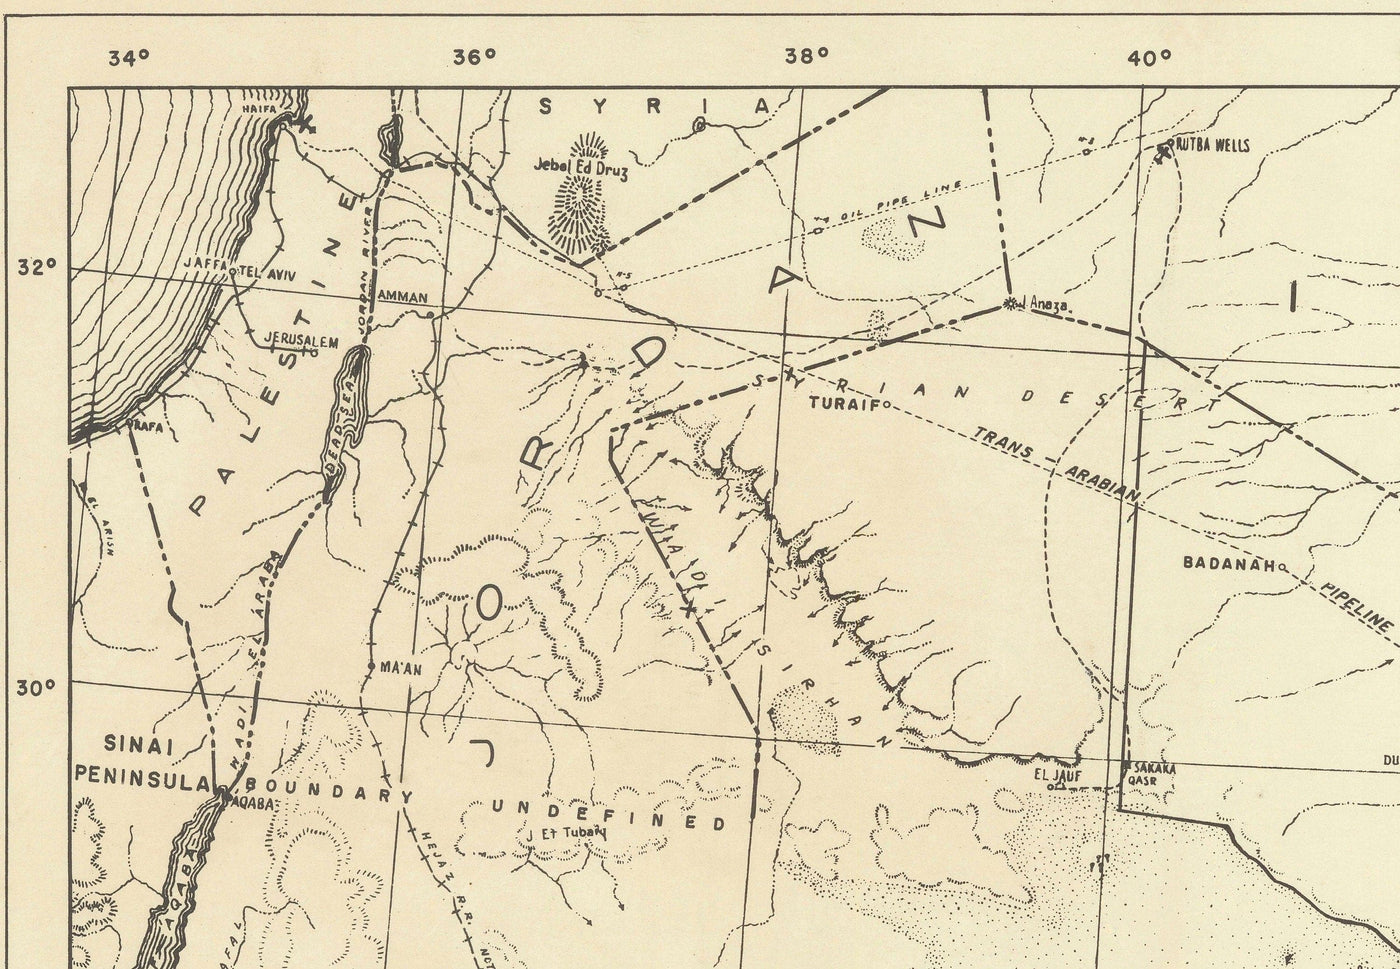 Alte Aramco-Karte, 1953 - Erste Karte der Arabian American Oil Company - Saudi-Arabien, Pipelines, Förderung, Dubai, Riyadh